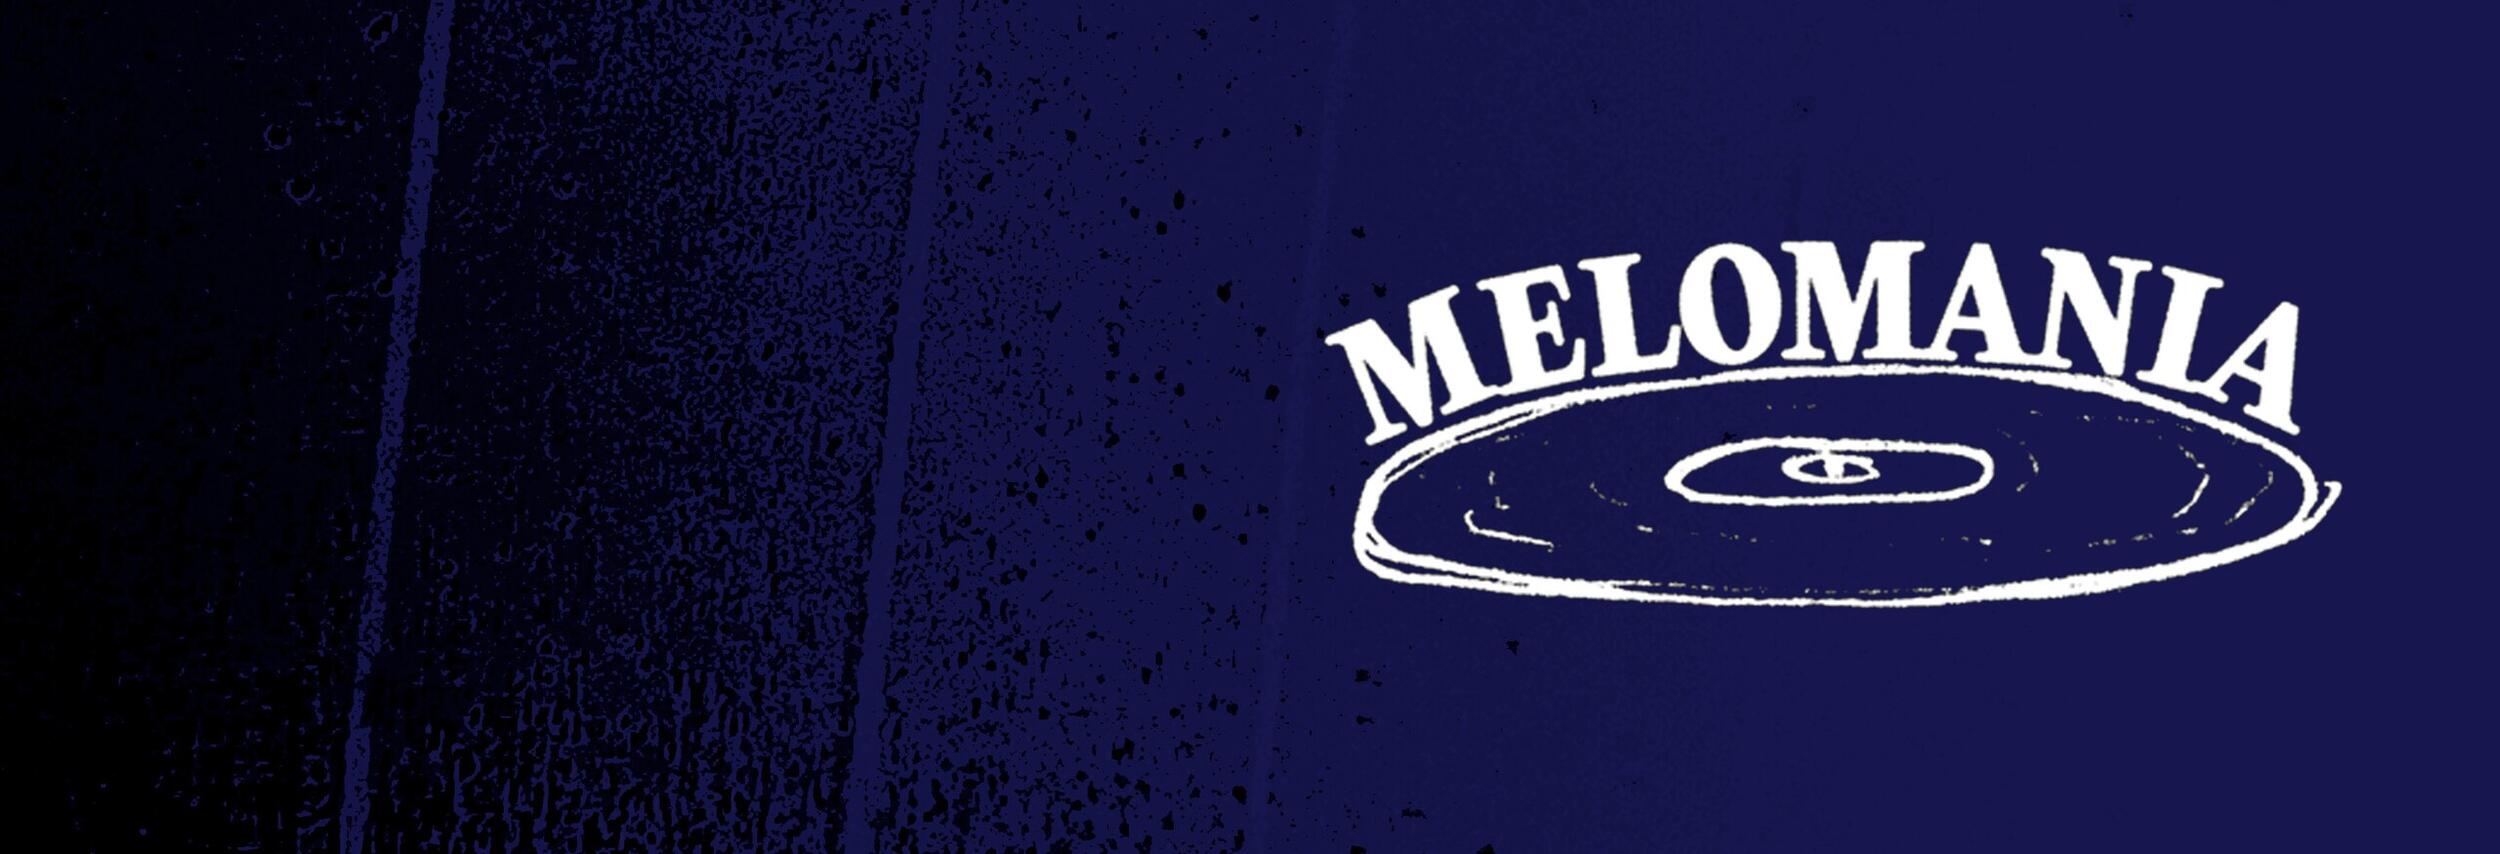 Melomania#7 [música]